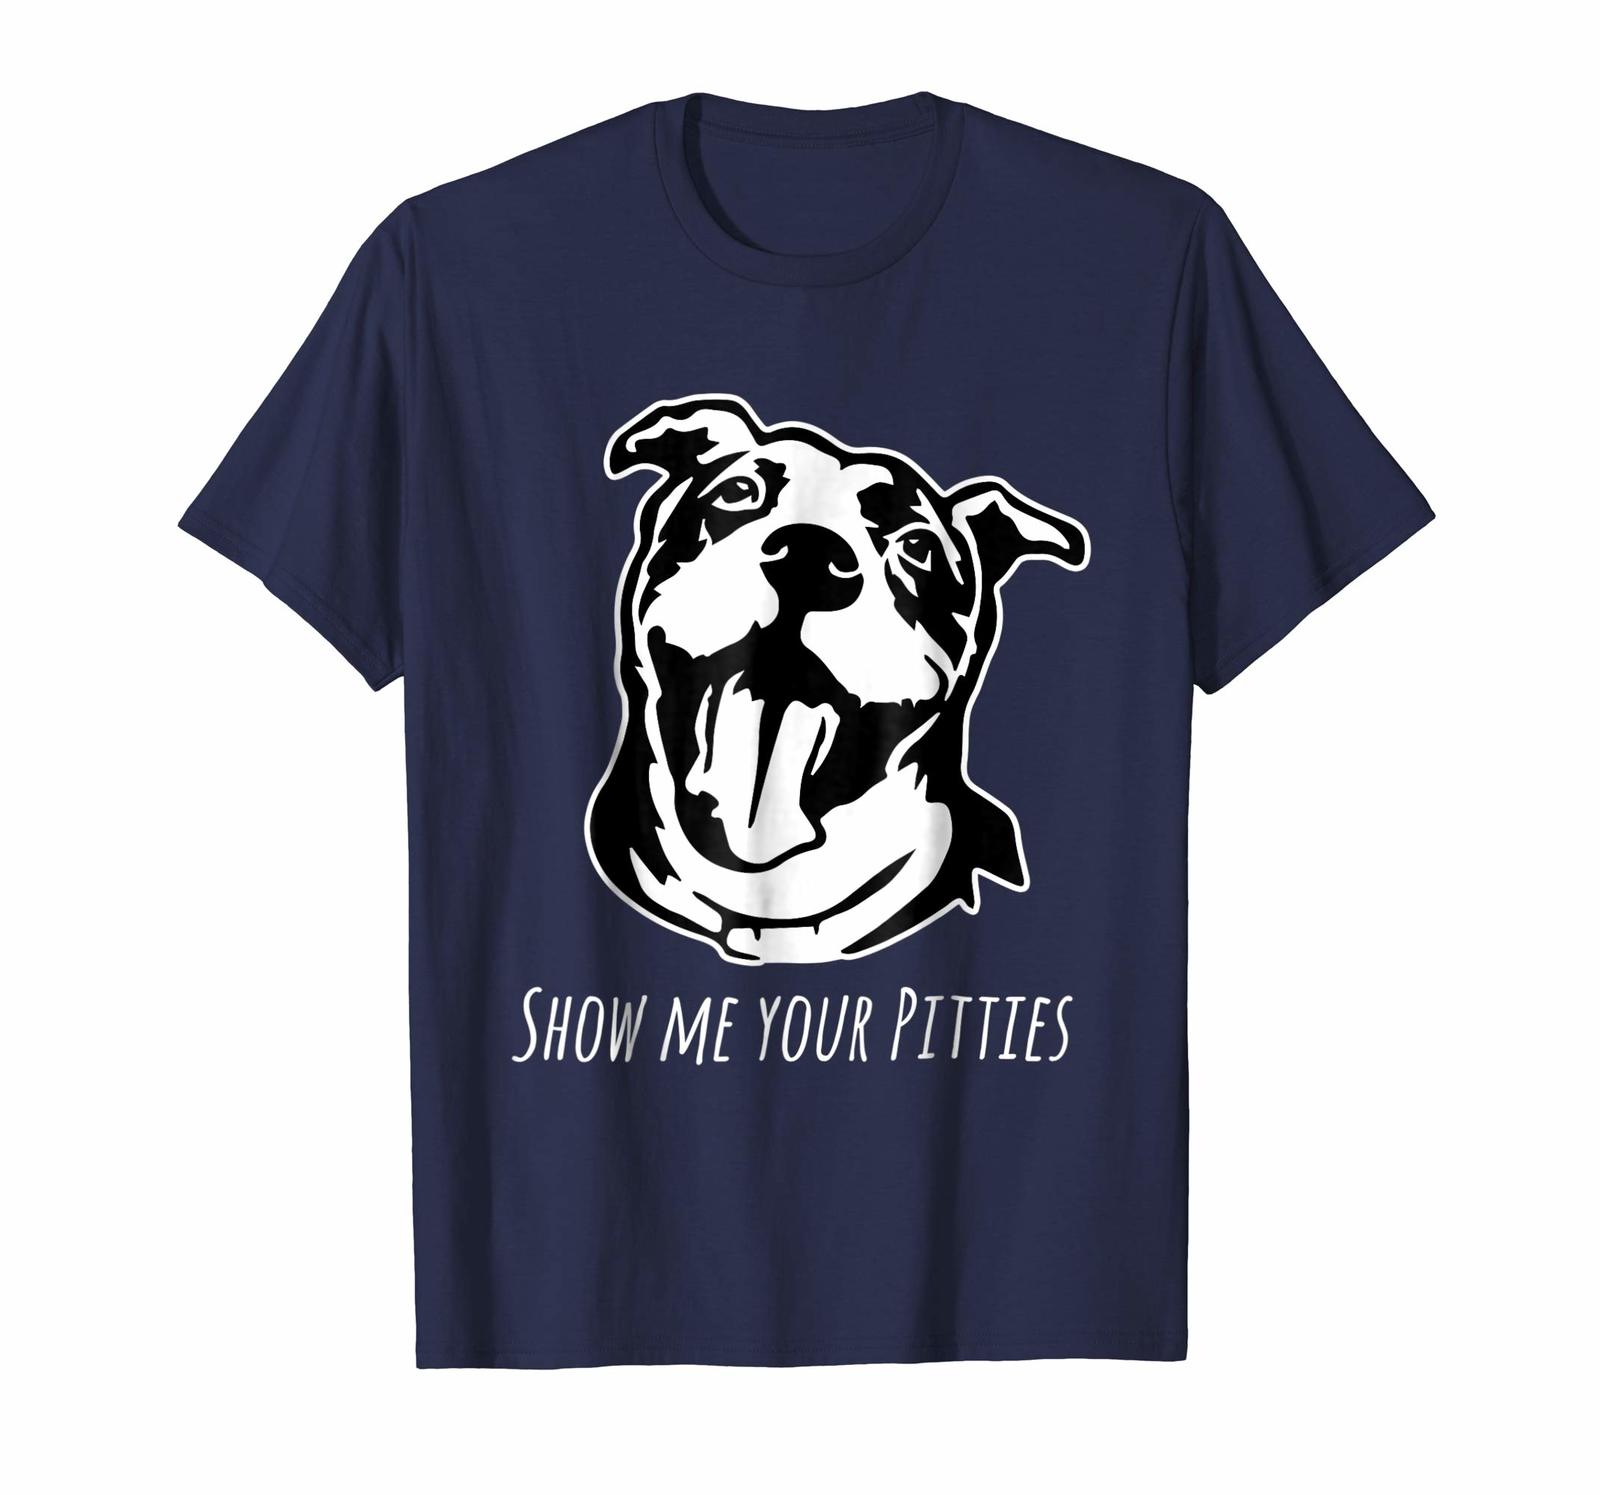 Brand Dog - Dog fashion - show me your pitties funny pitbull dog bully breed tee shirt men